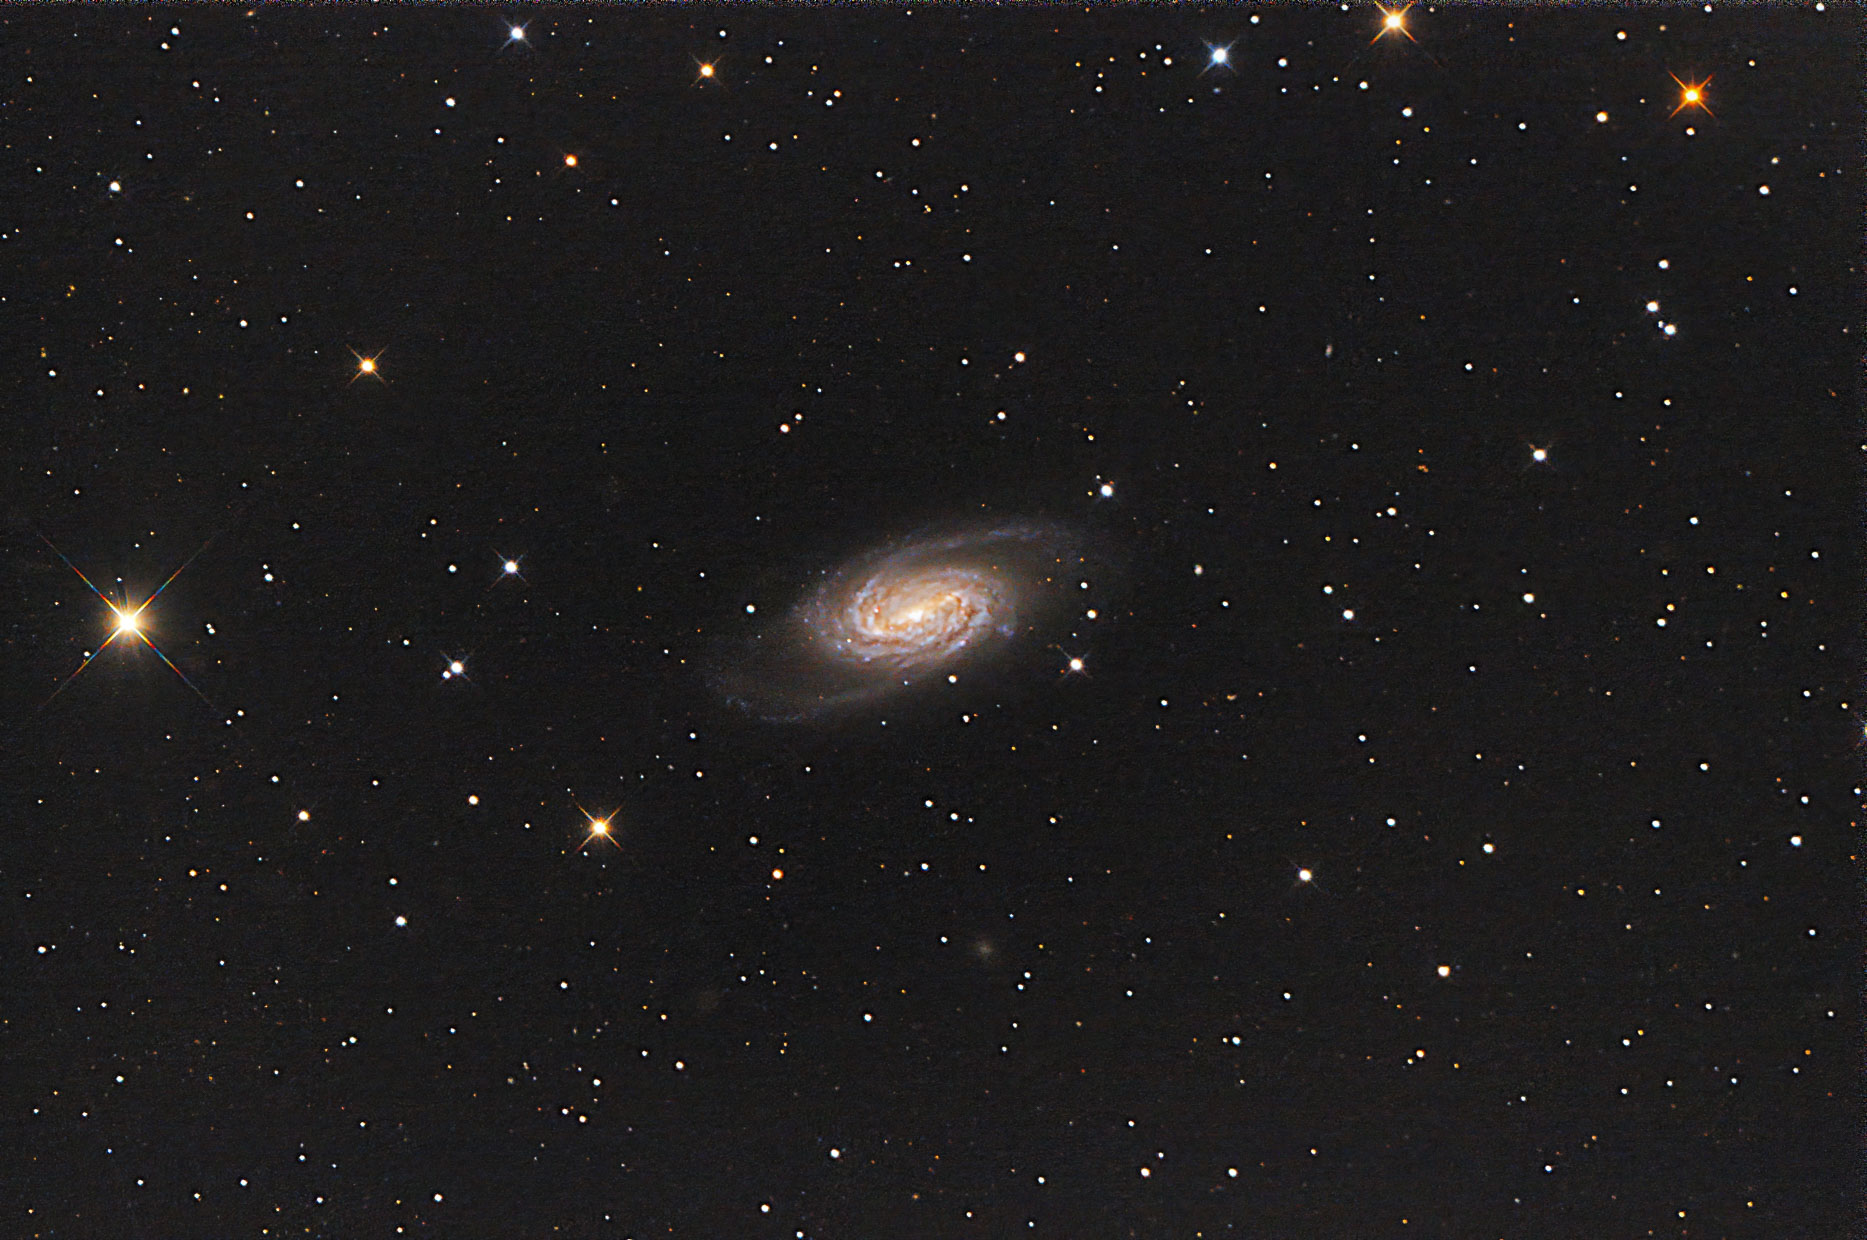 NGC2903_PIproc_APF-R.jpg